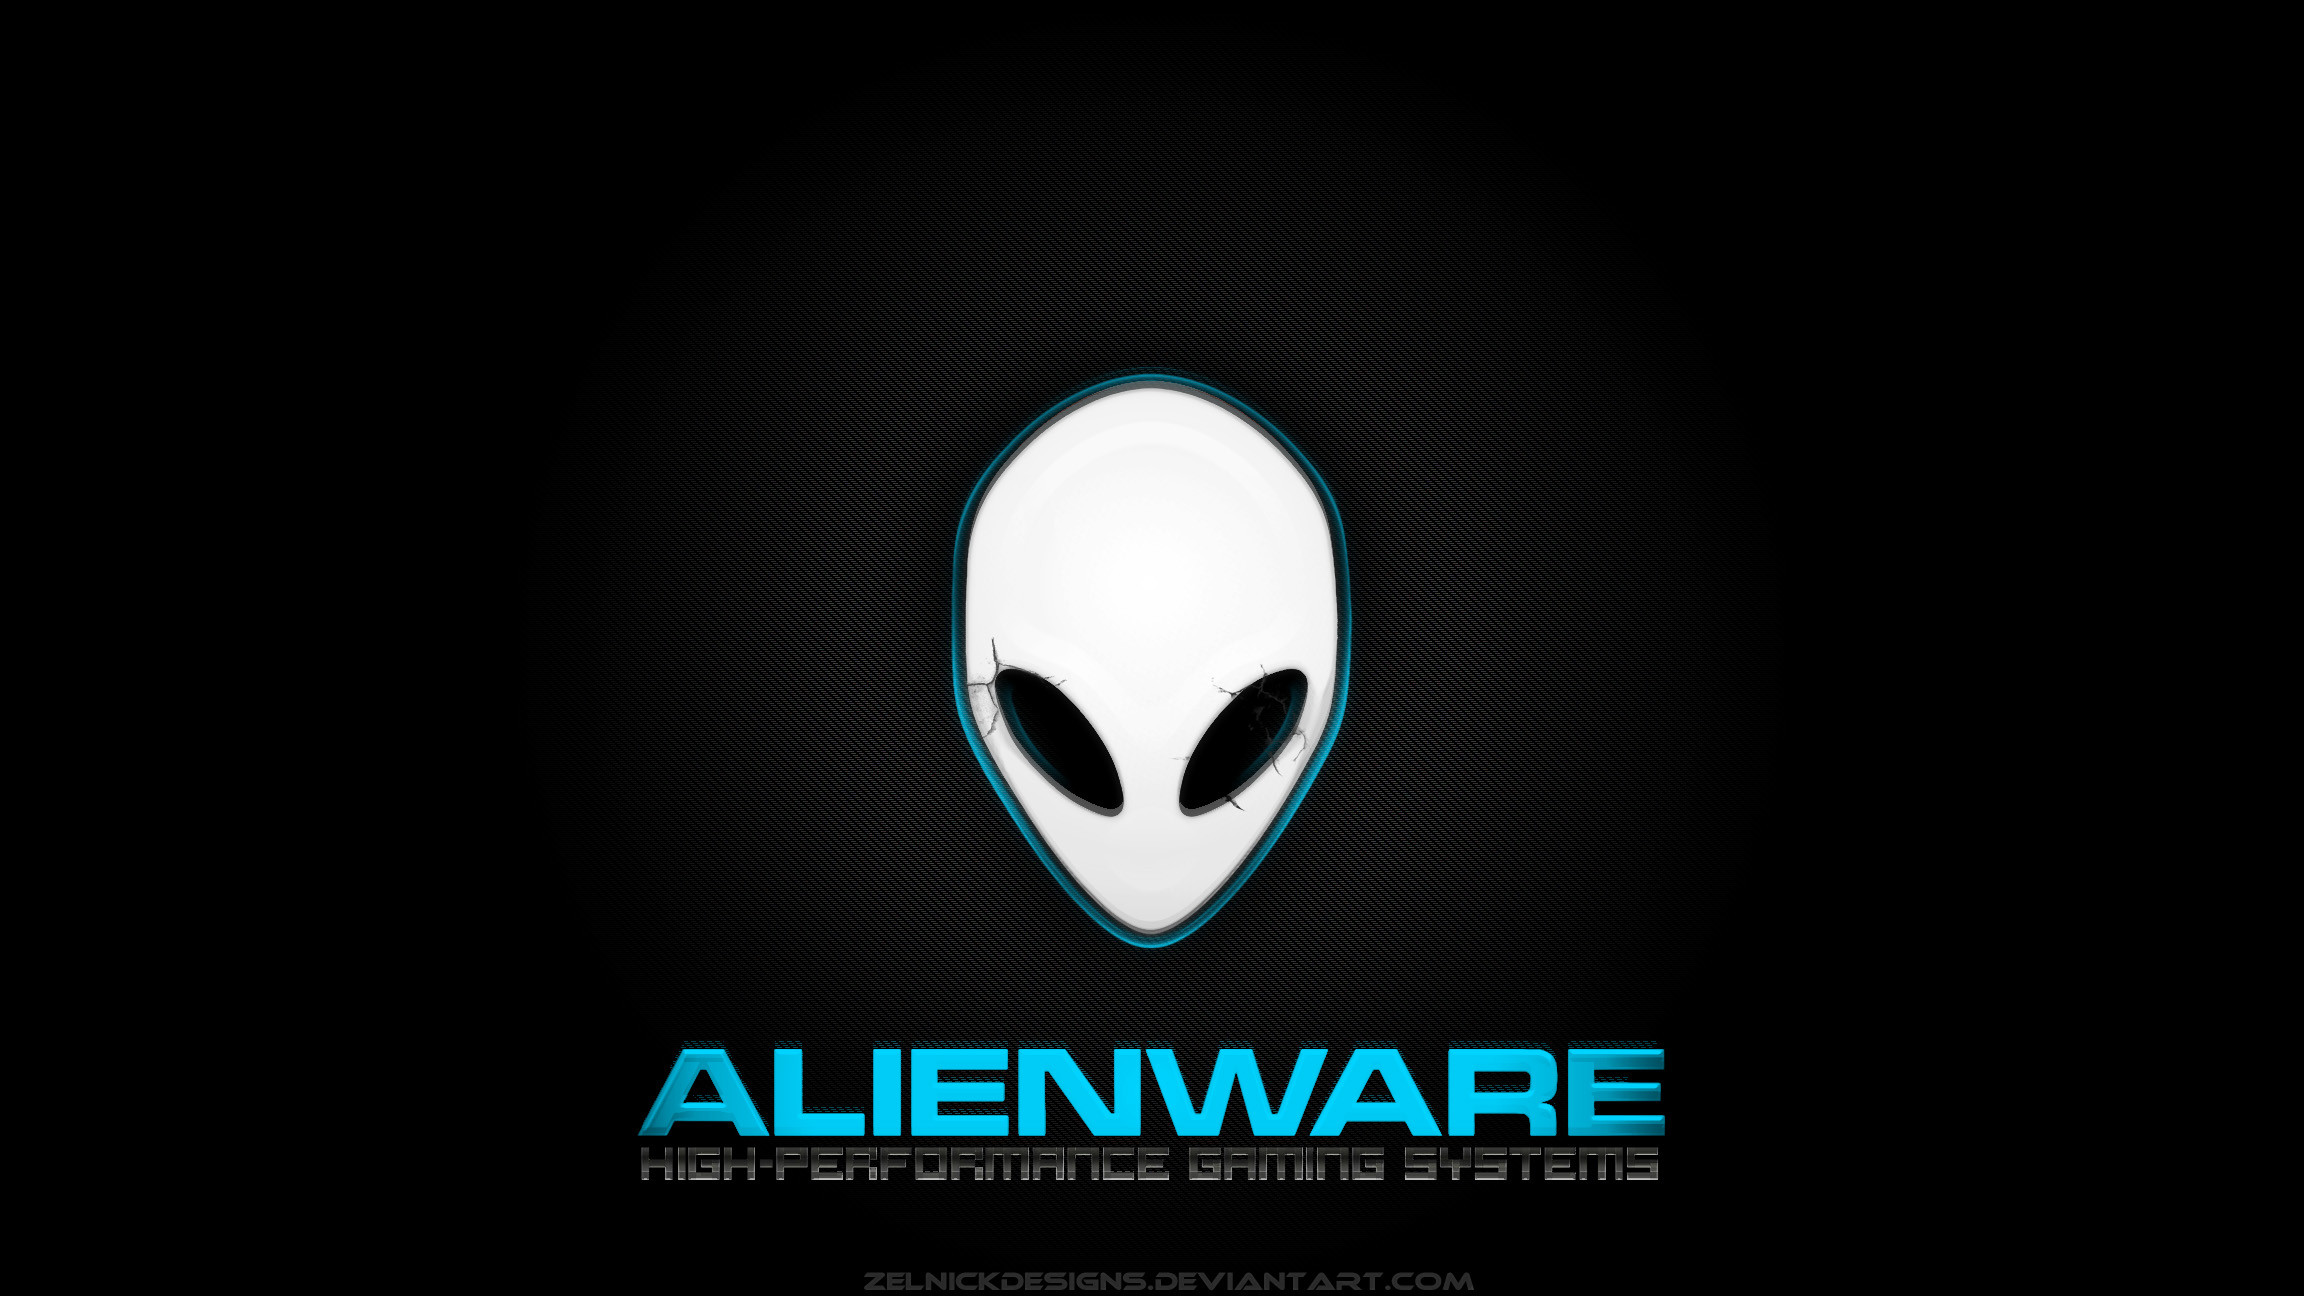 2304x1296 Alienware Wallpaper Pack v2 by ZelnickDesigns Alienware Wallpaper Pack v2  by ZelnickDesigns